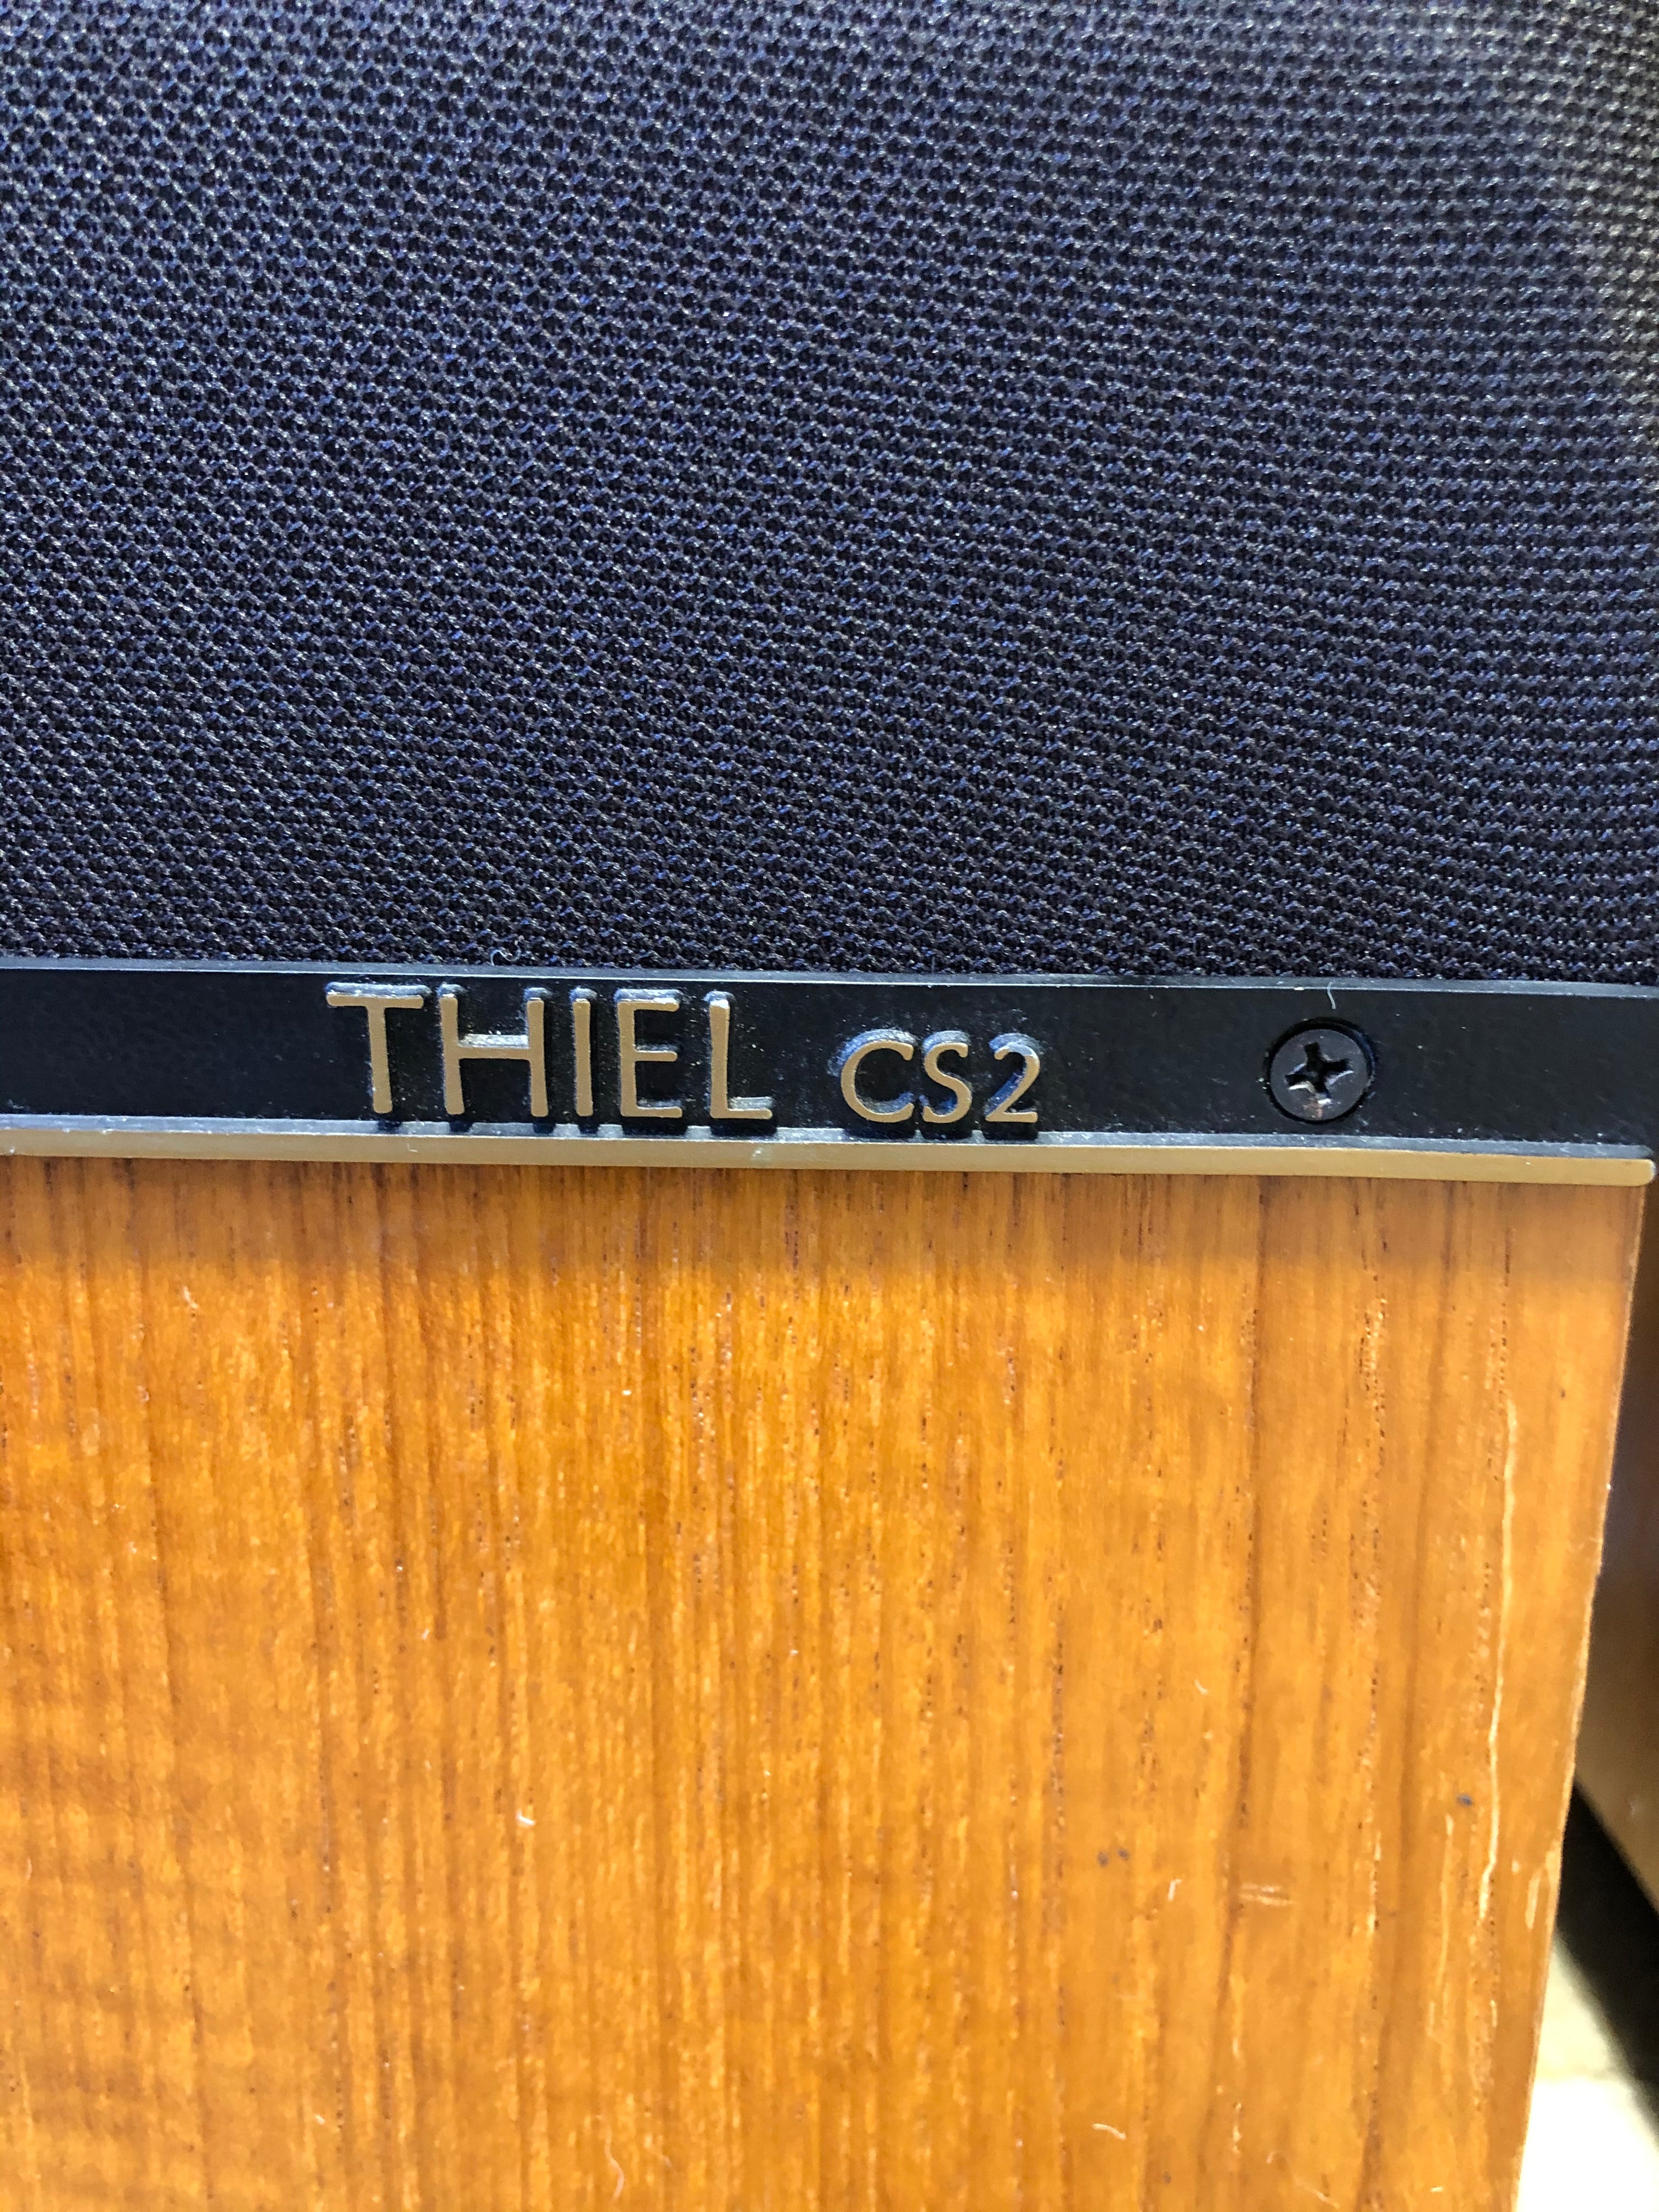 Thiel Audio CS2 "Coherent Source" Vintage Loudspeakers -SOLD